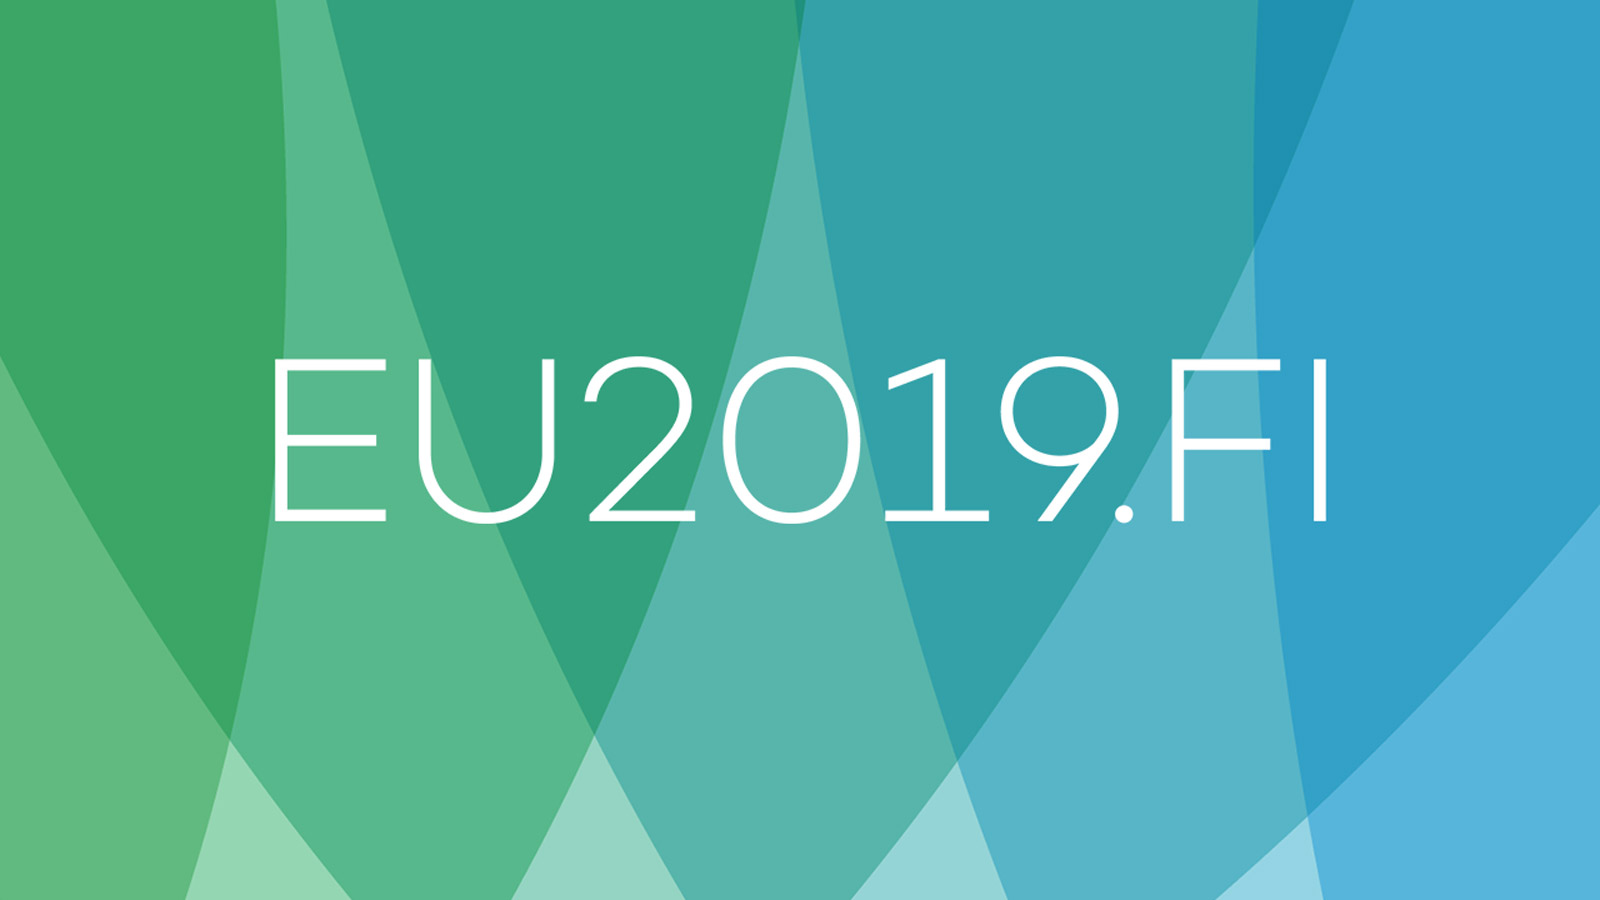 EU2019FI logo